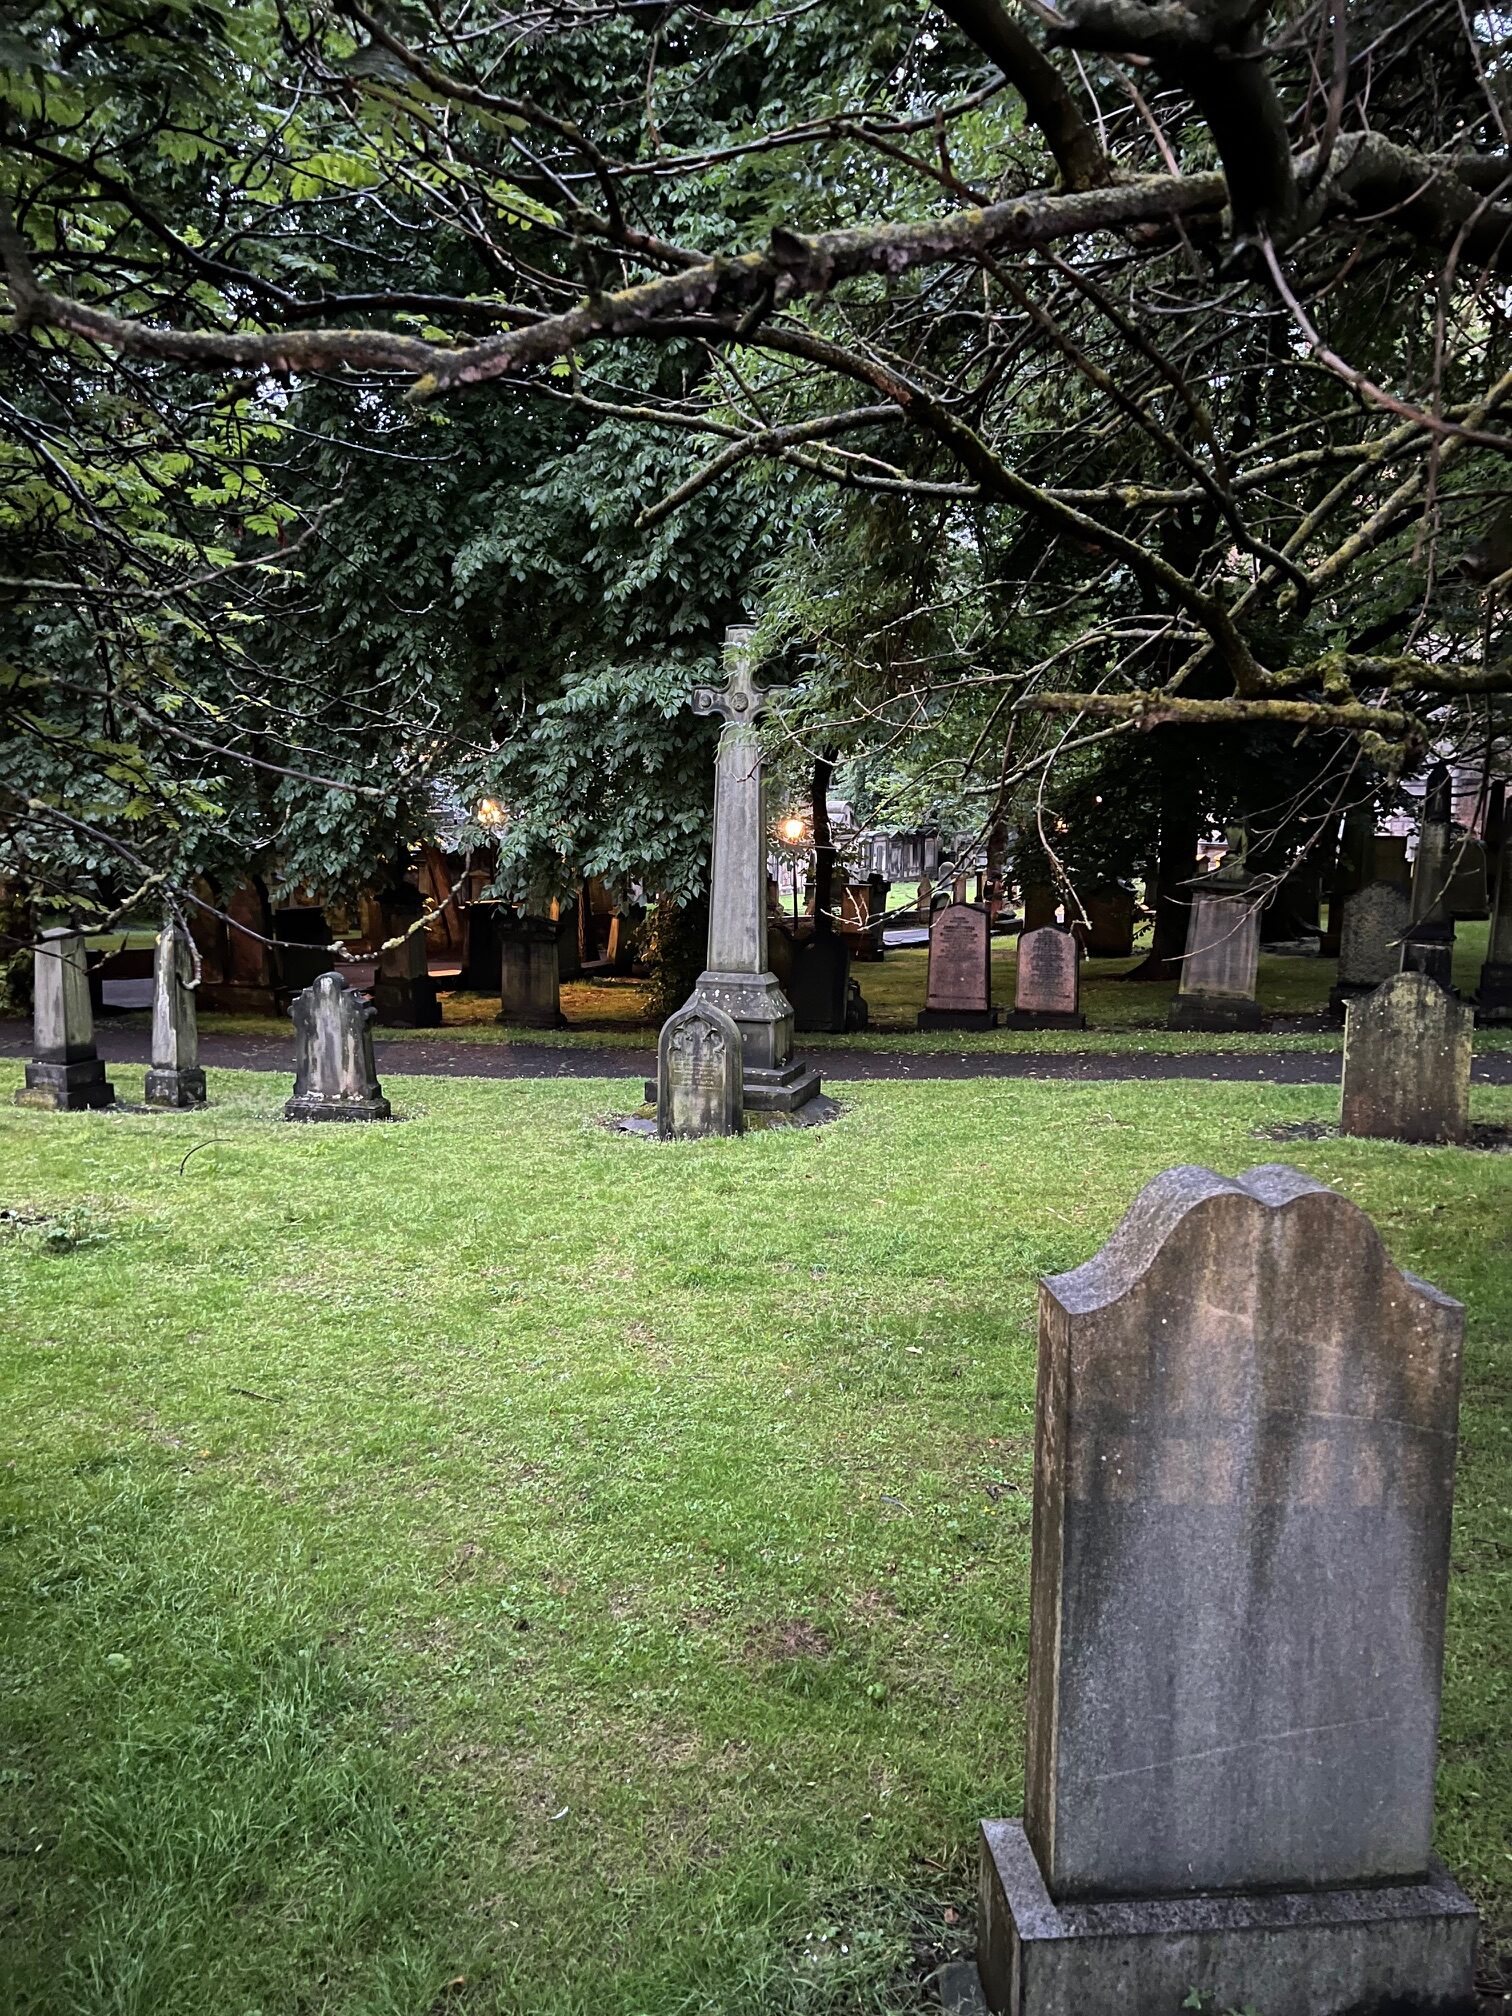 The graveyard during daytime 